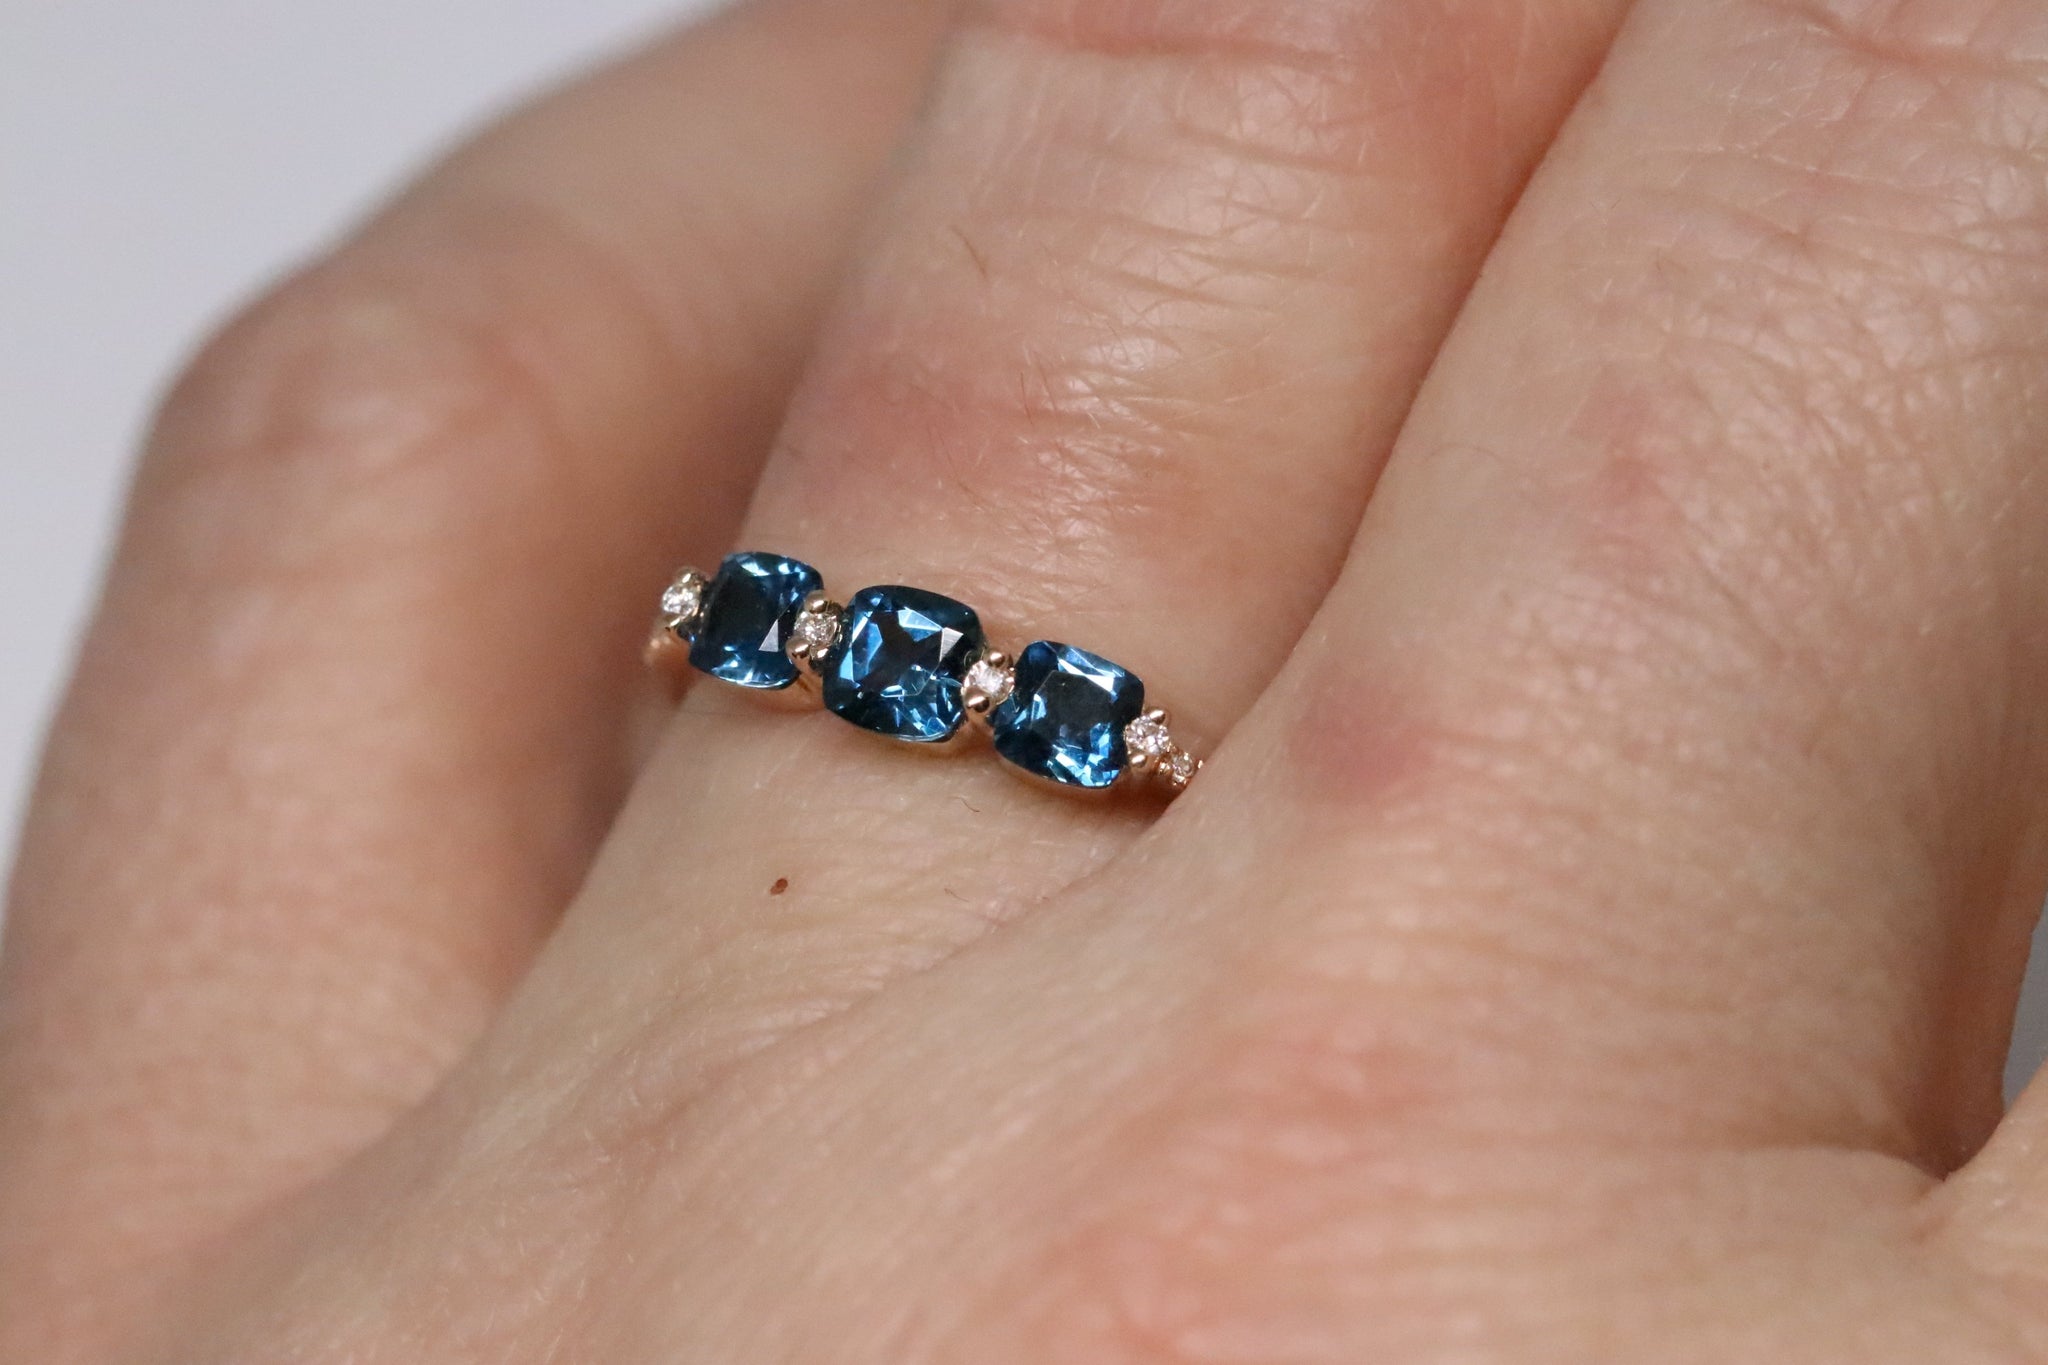 3 Carat Blue Topaz Engagement Ring, Blue Topaz and Diamonds Wedding Ring,  14K White Gold Pave Set HandMade Certified